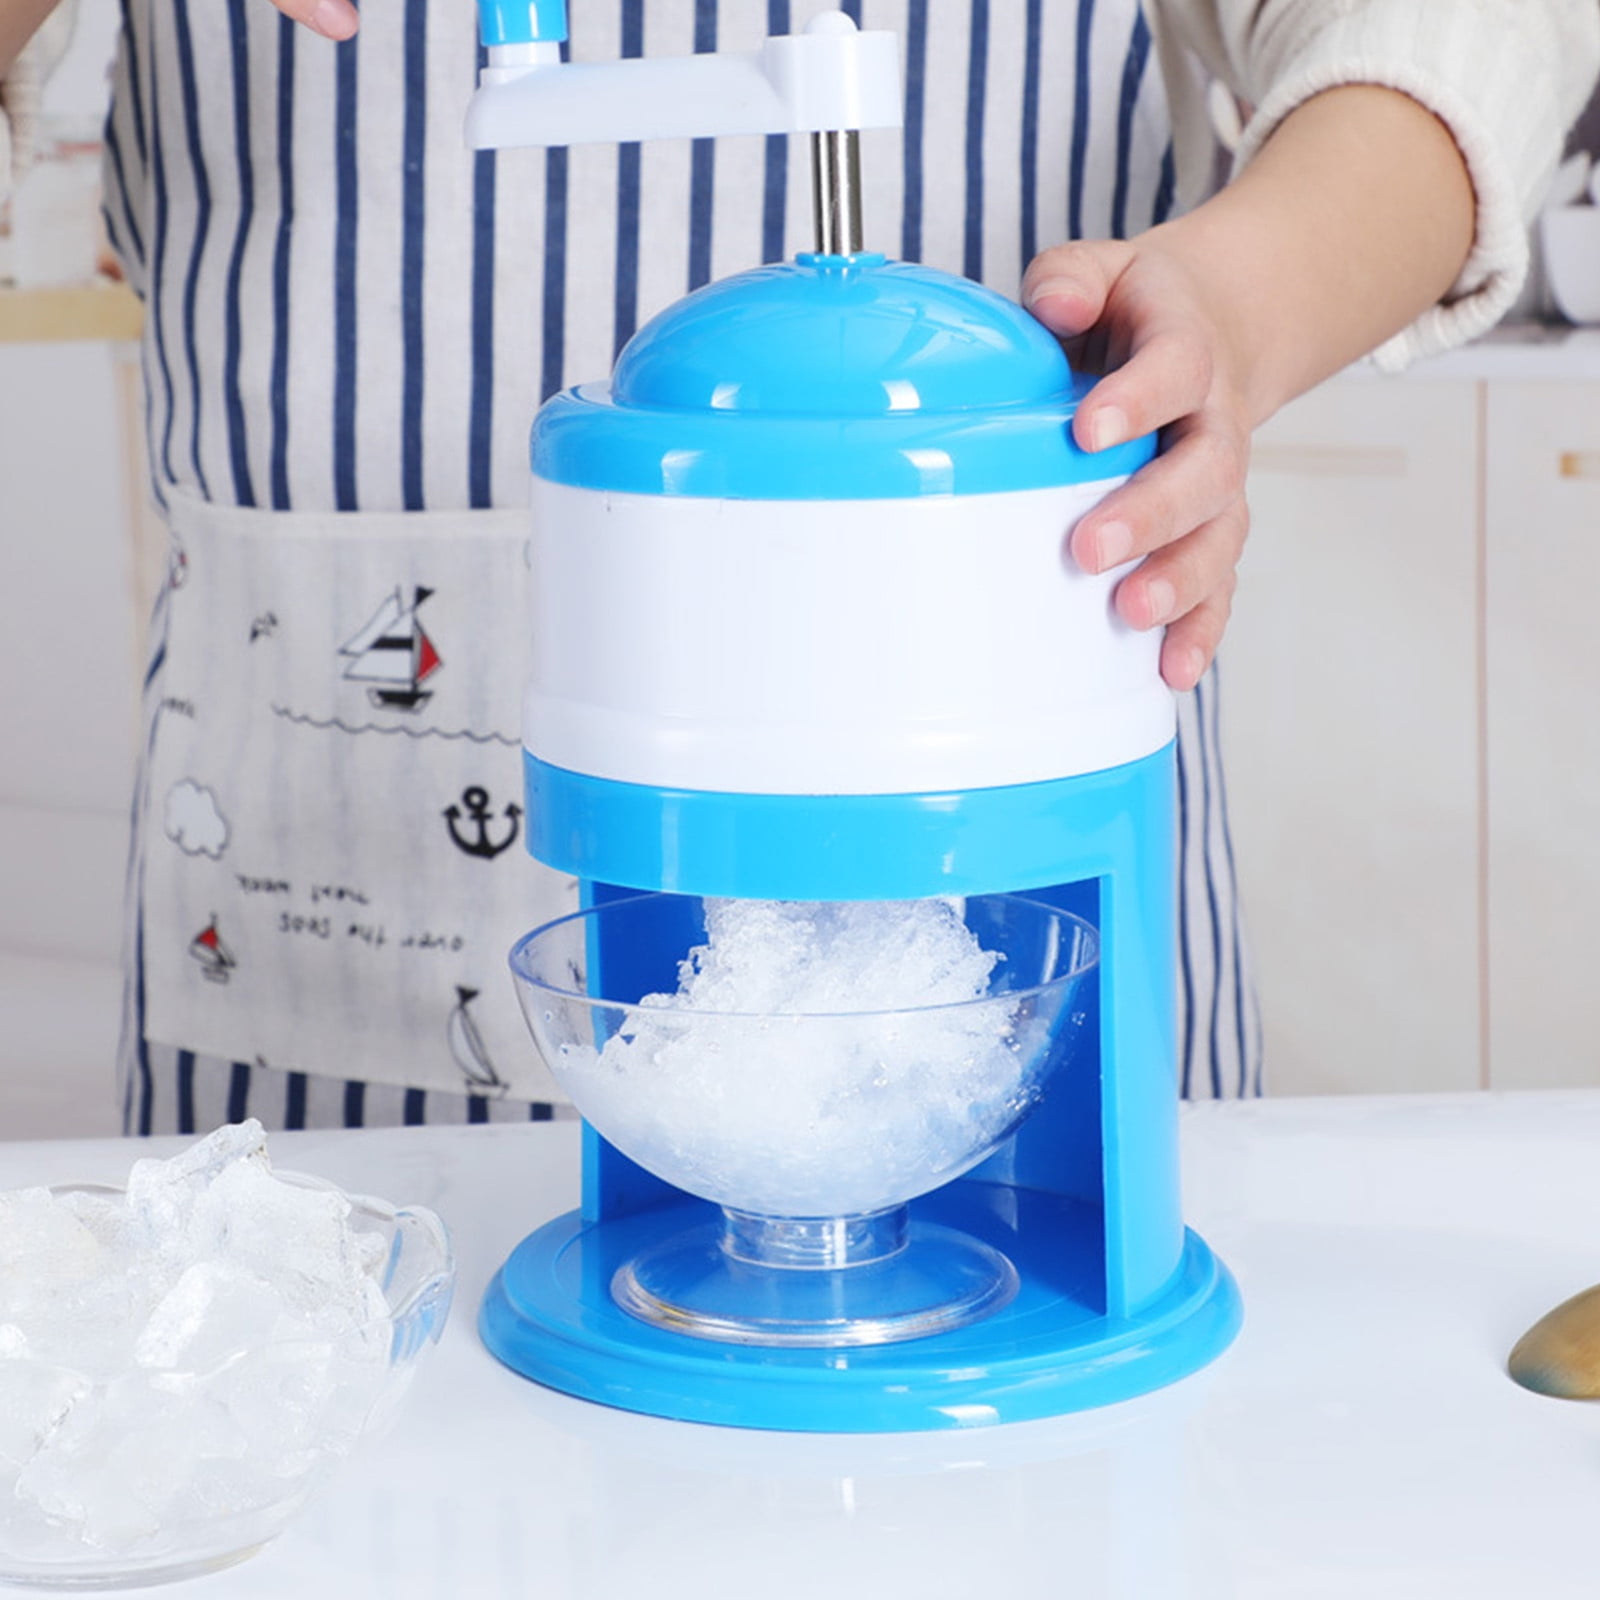 Margot74 Ice Crusher Snow Cone Grinding Hand Crank Kids Summer Smoothies Tool Home Kitchen DIY Mini Manual Shaver Smasher Shredding 